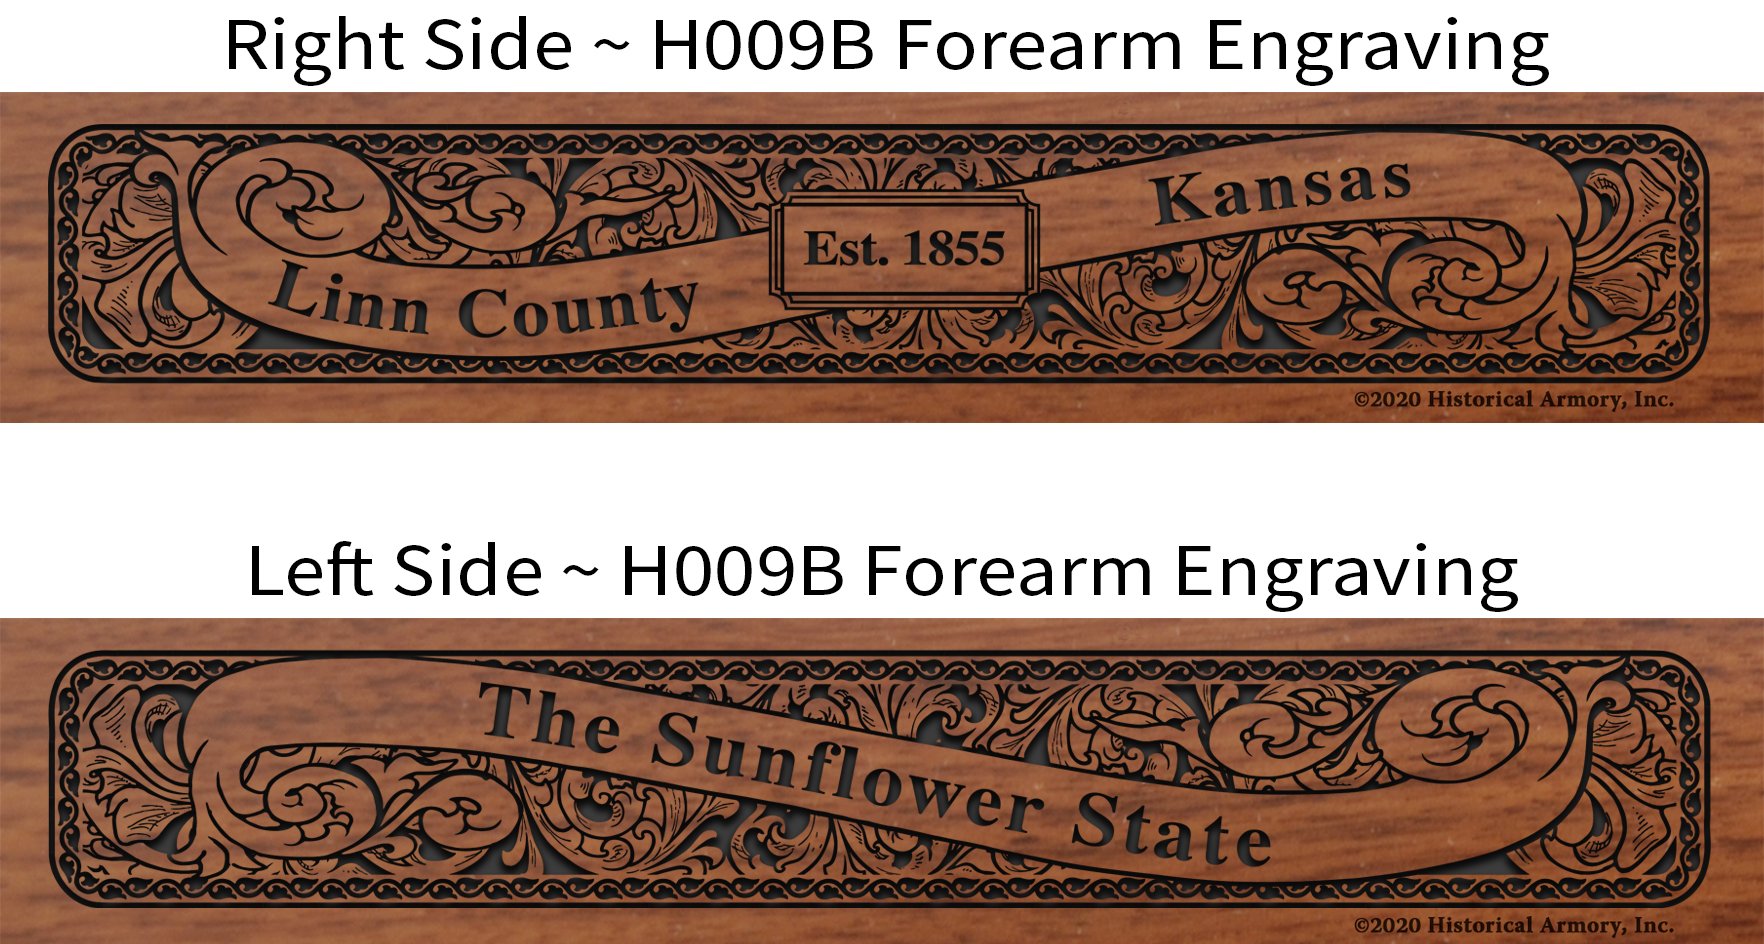 Linn County Kansas Engraved Rifle Forearm H009B